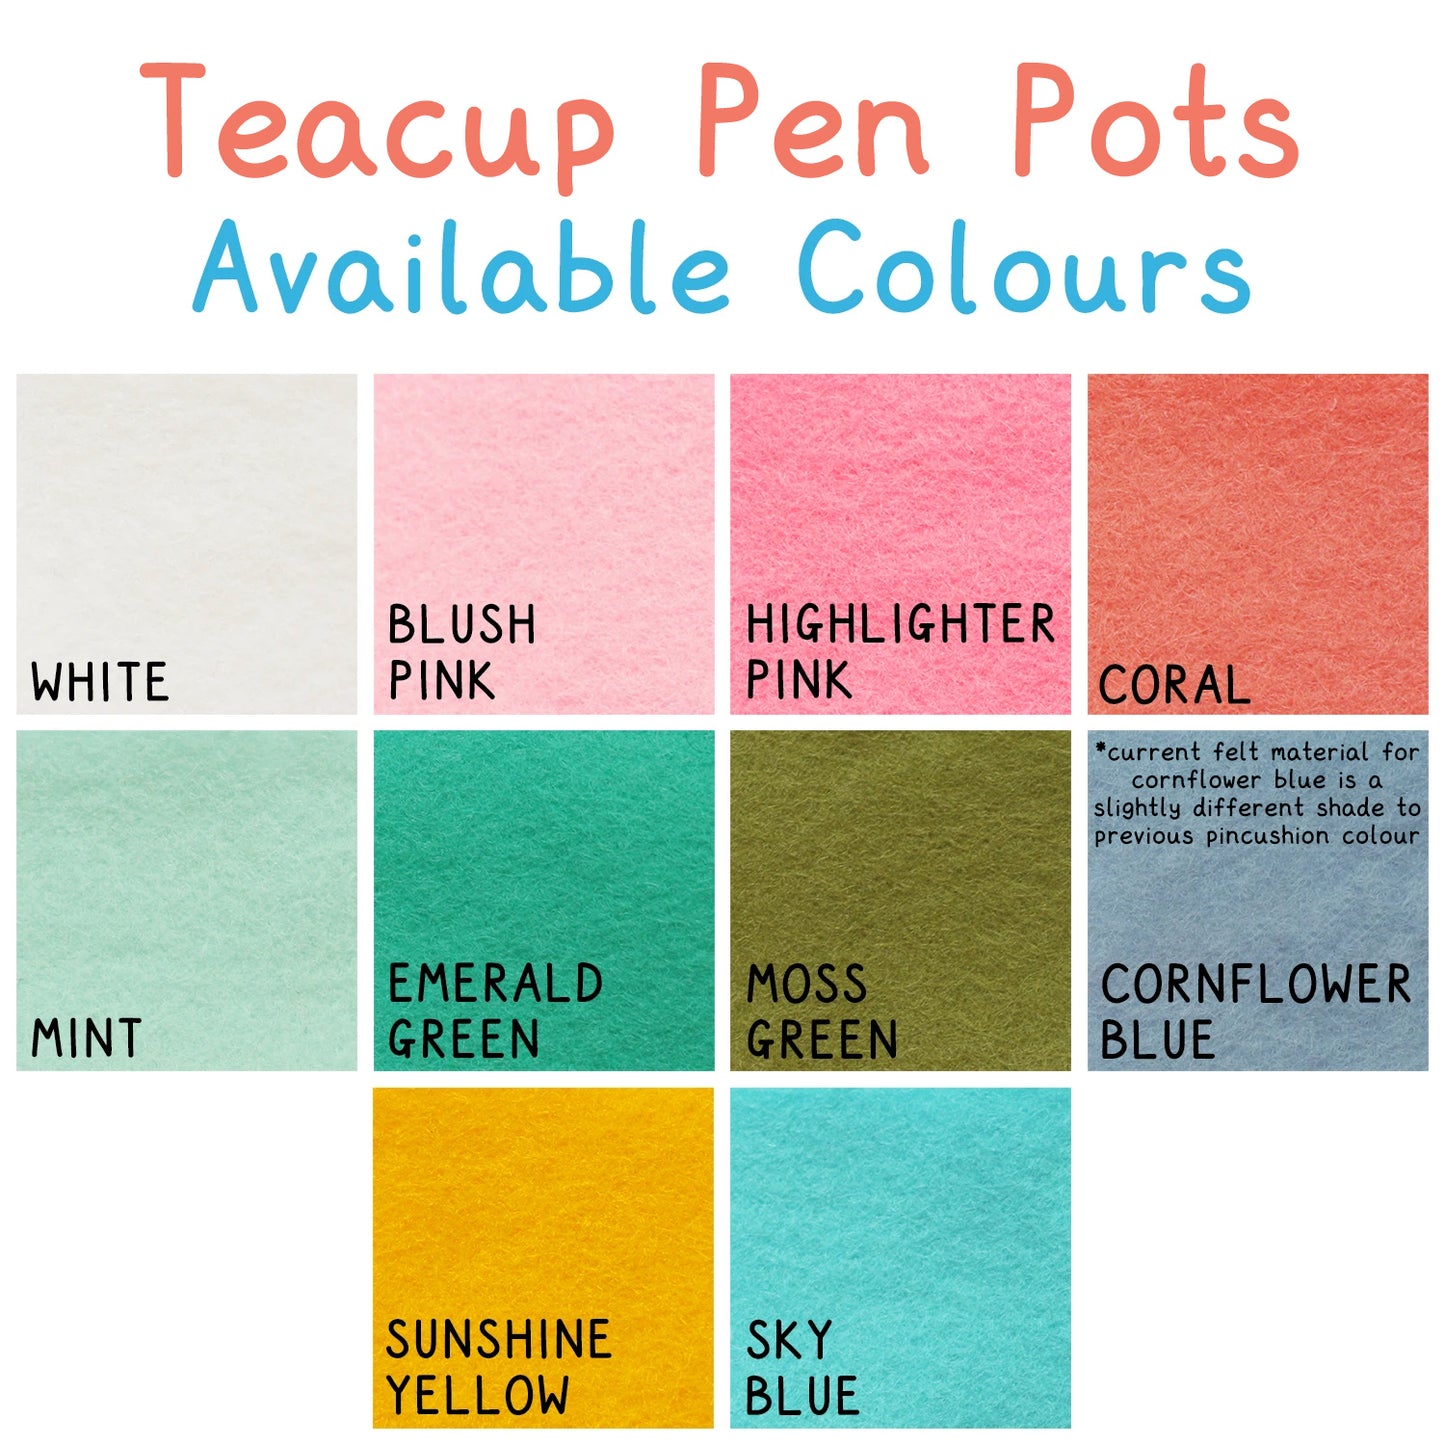 Teacup Pen Pot